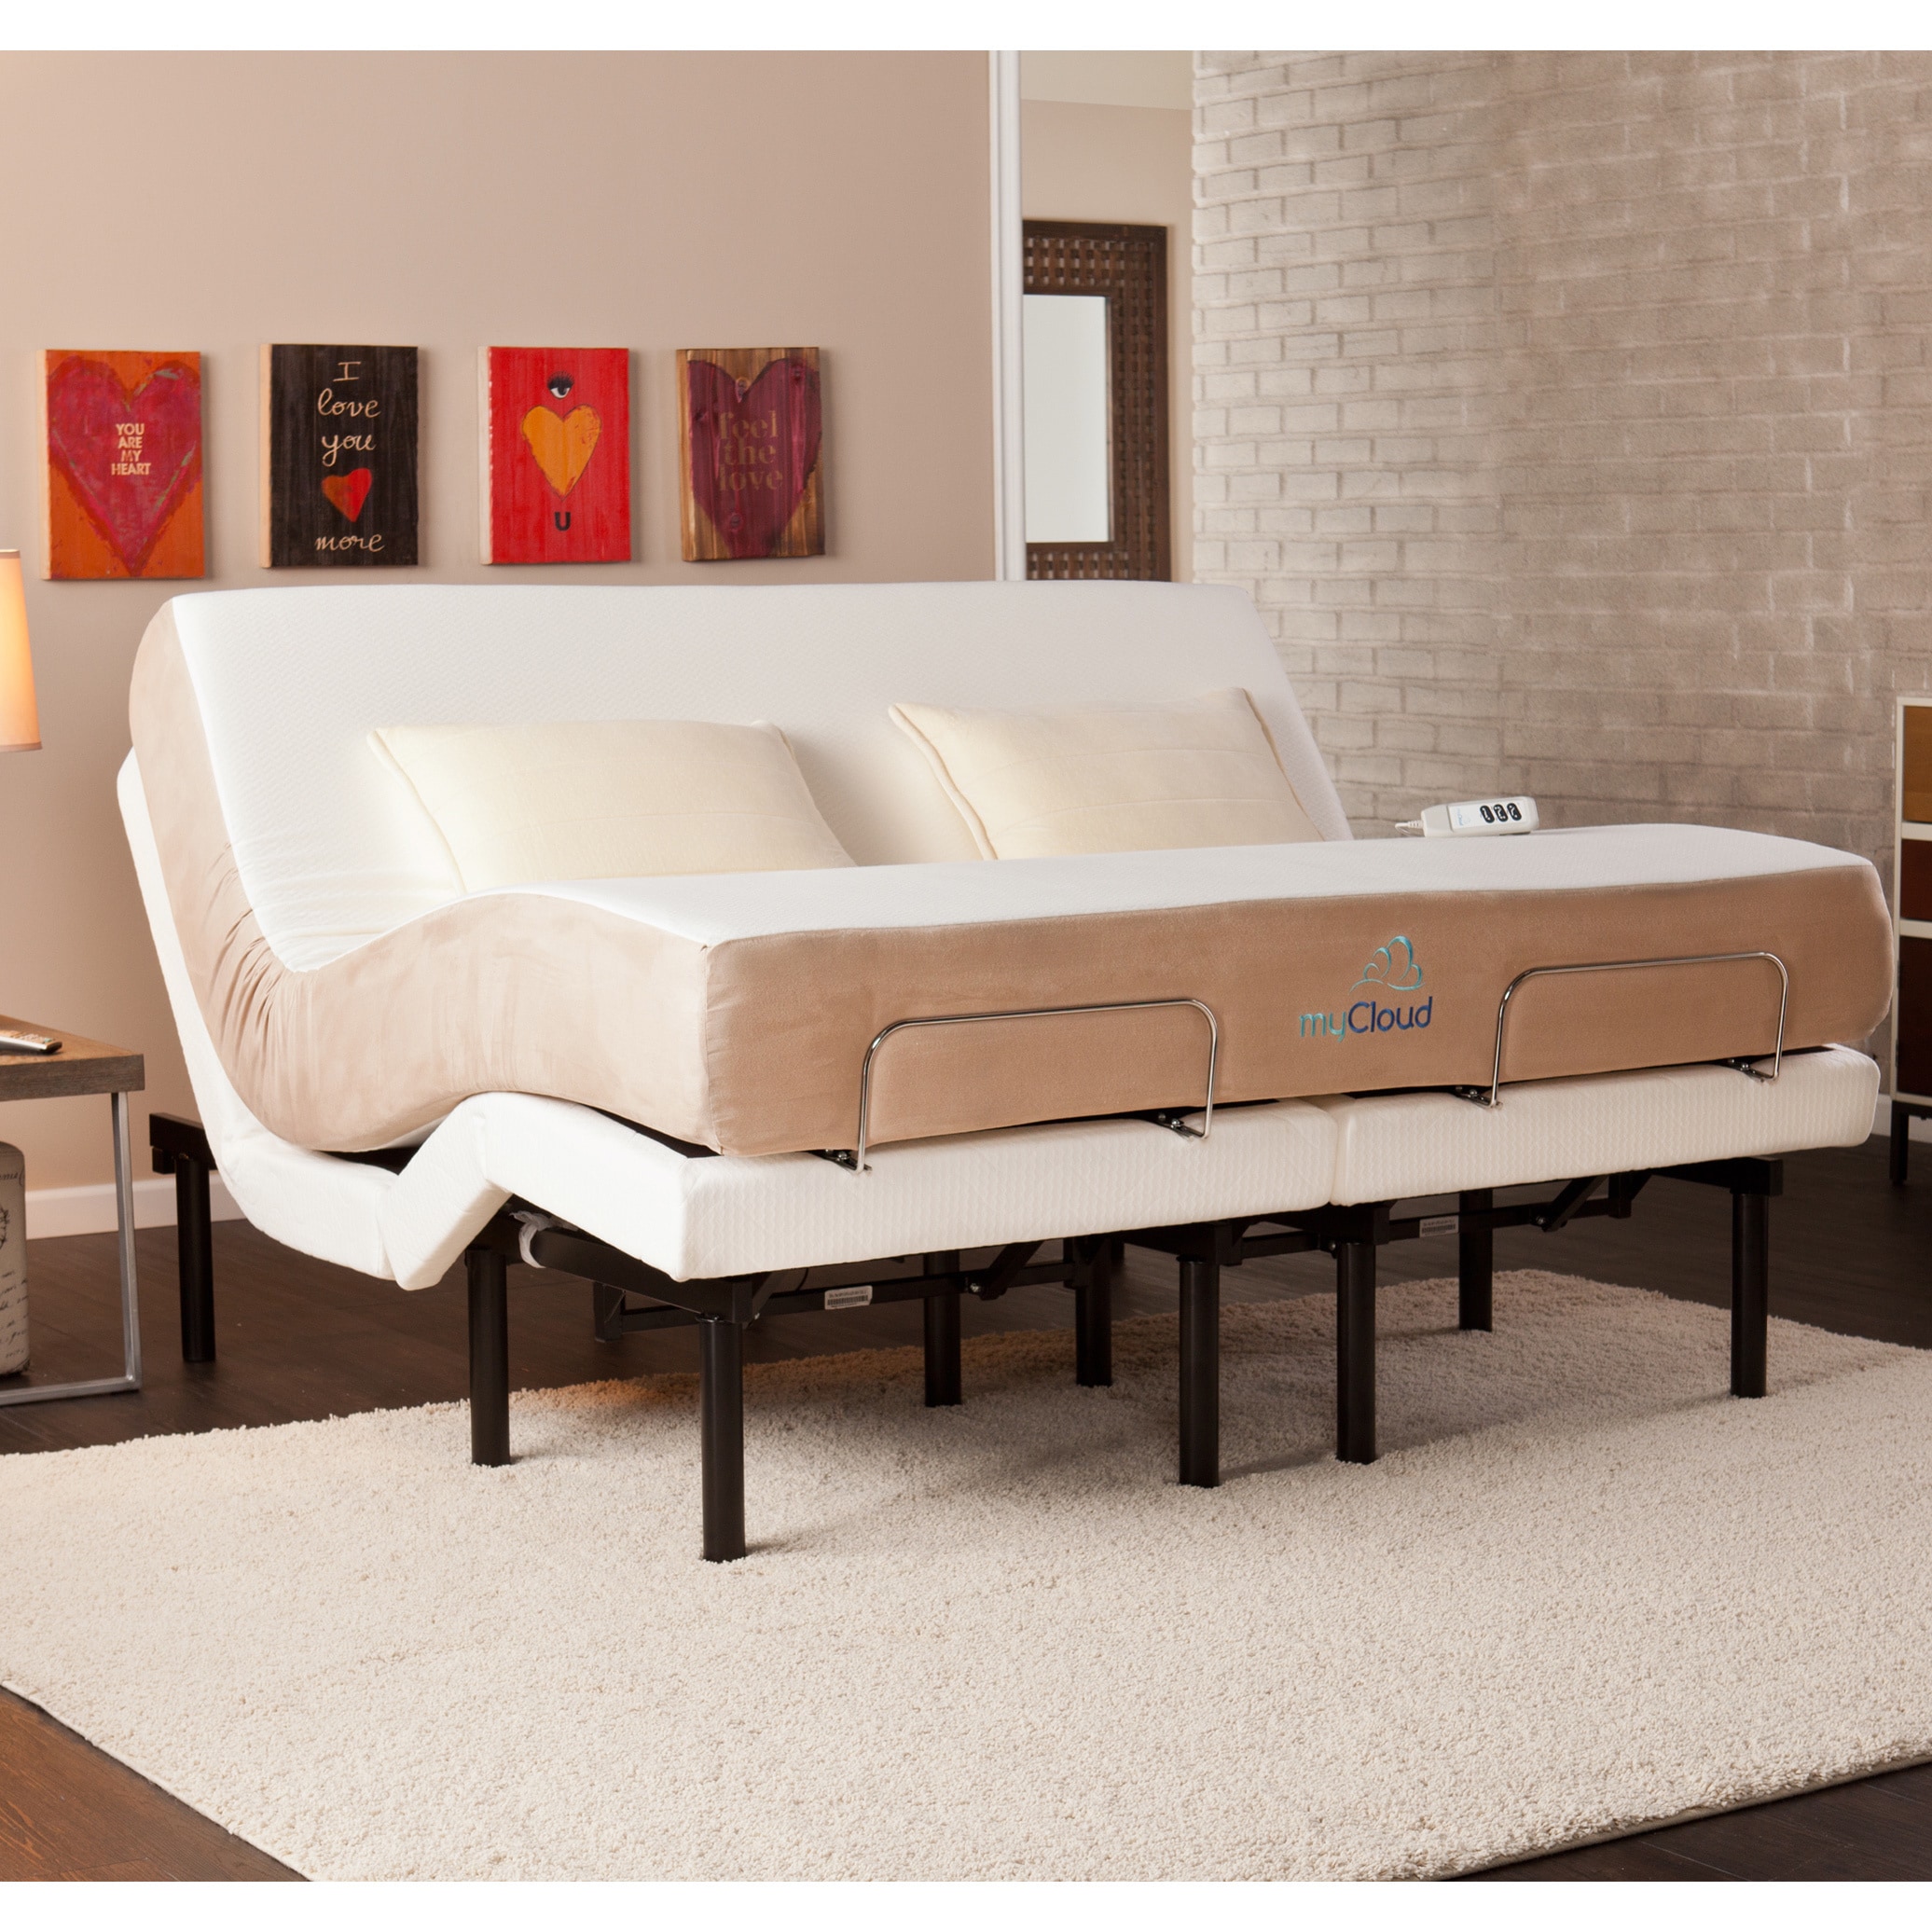 MyCloud Adjustable Bed King Size With 10 Inch Gel Infused Memory Foam Mattress 39c87f49 Aa46 45b6 8e36 85e0da2c6872 